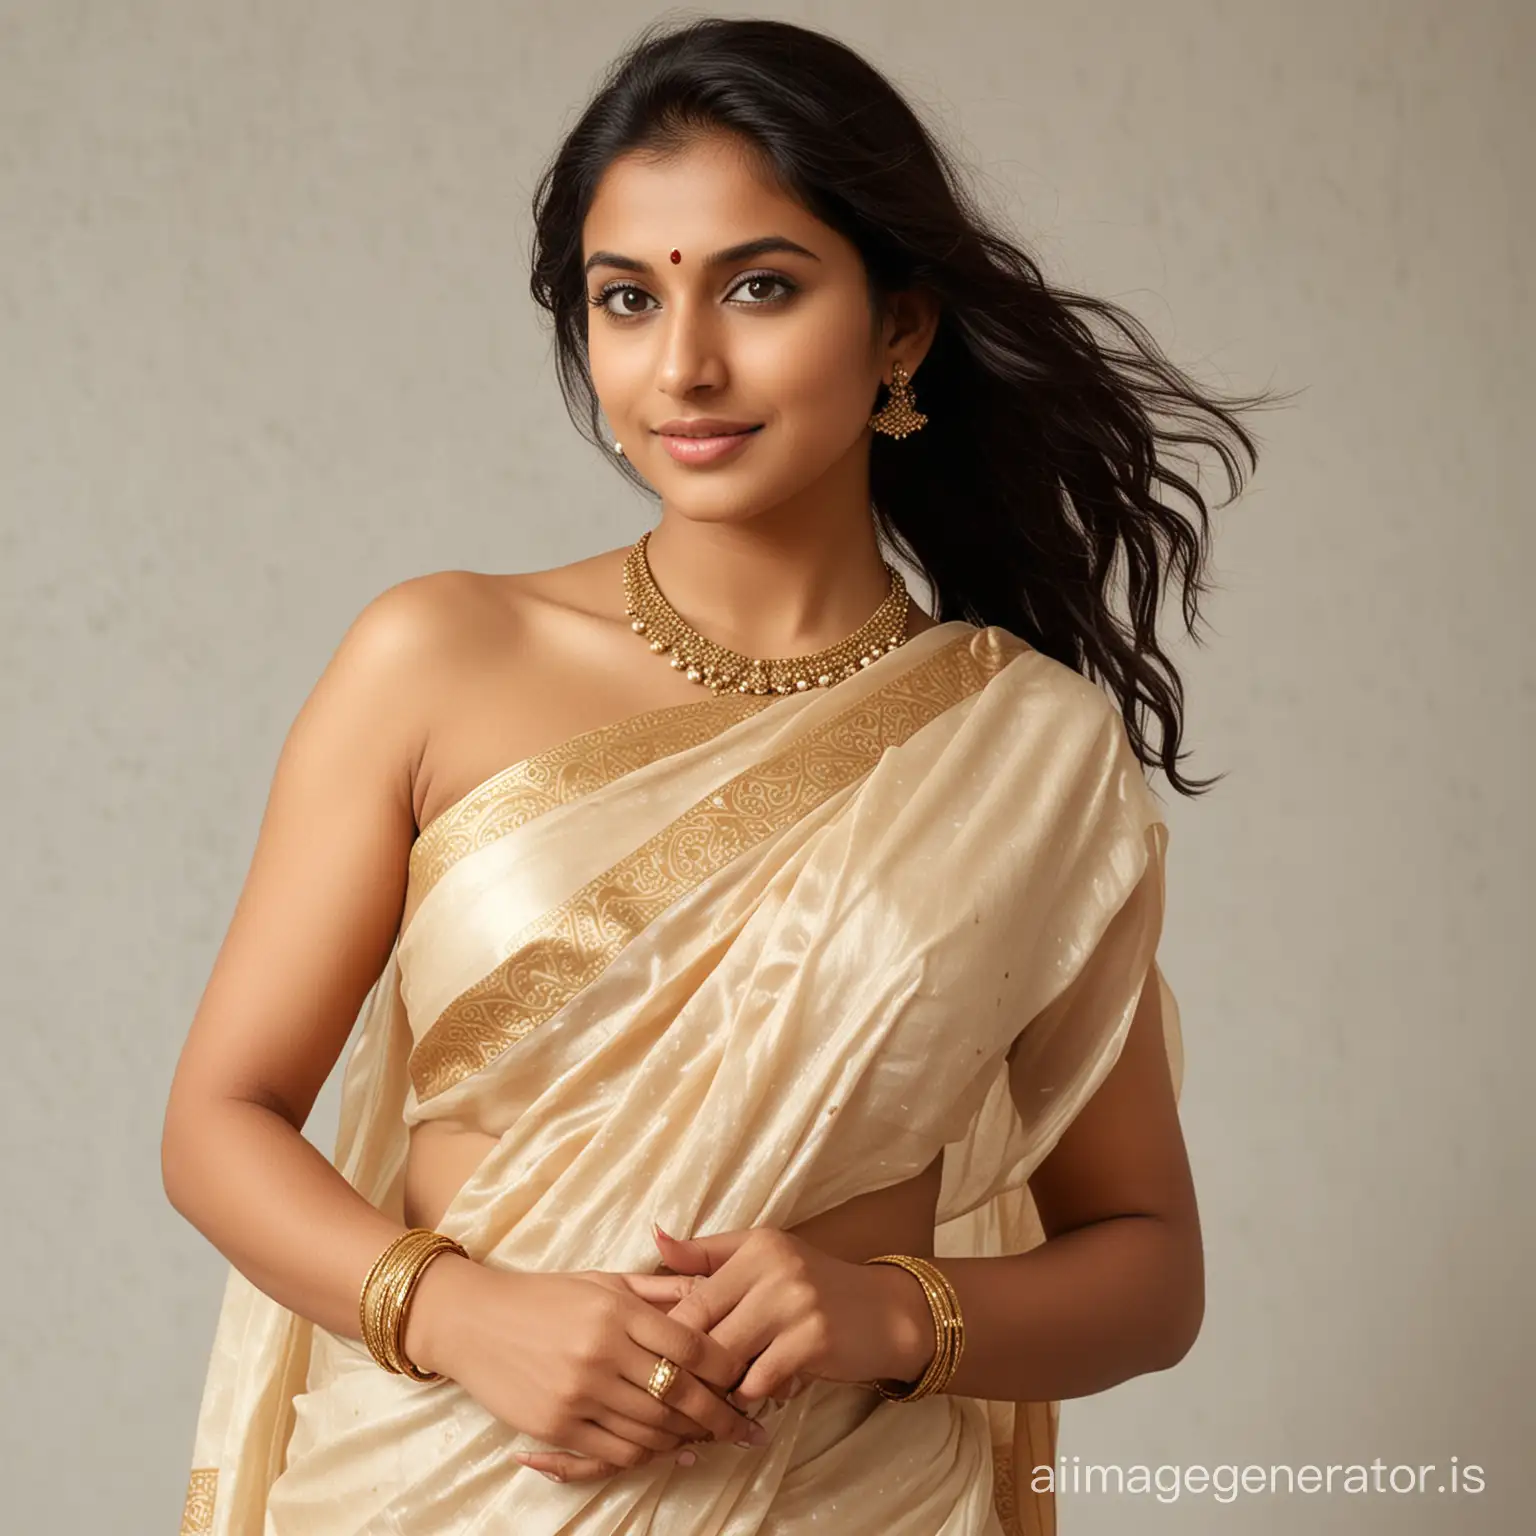 Traditional-Indian-Woman-in-Elegant-Saree-Pose